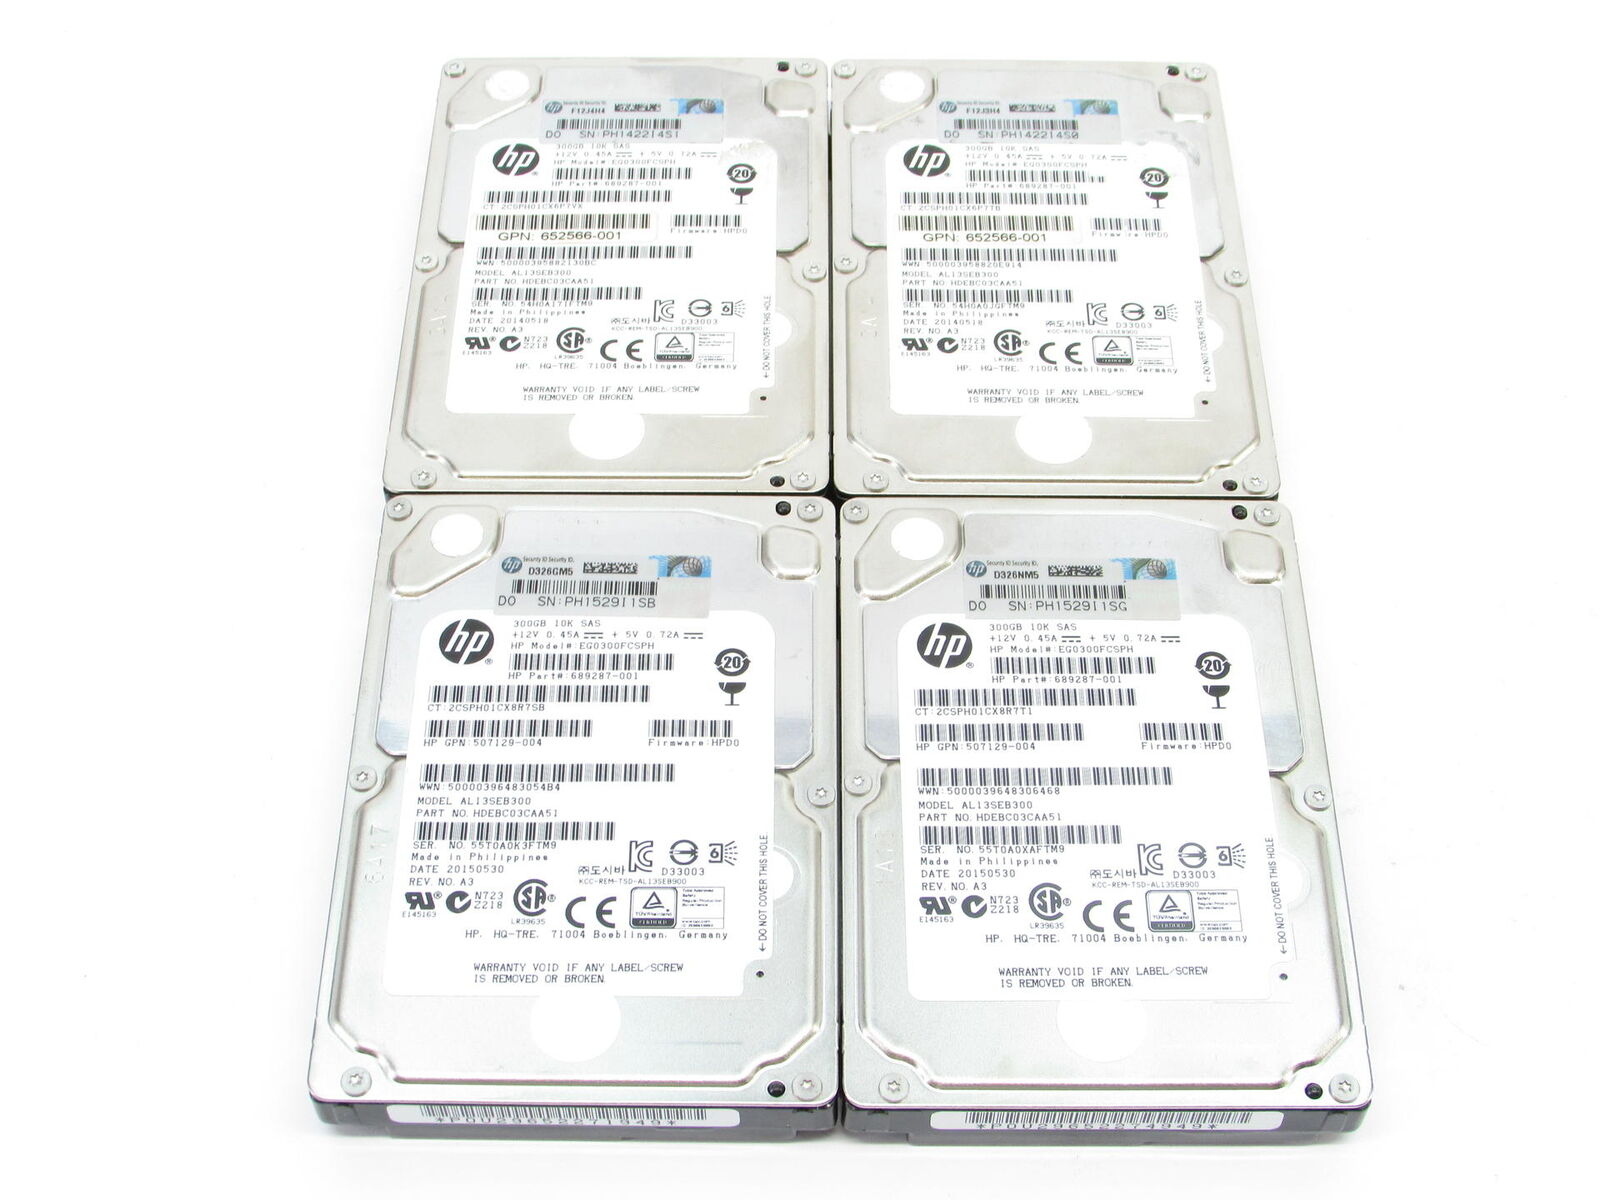 4x HPE 689287-001 300GB 10k 2.5” SAS 6Gbps 64mb Toshiba HDD Hard Drive Grade A